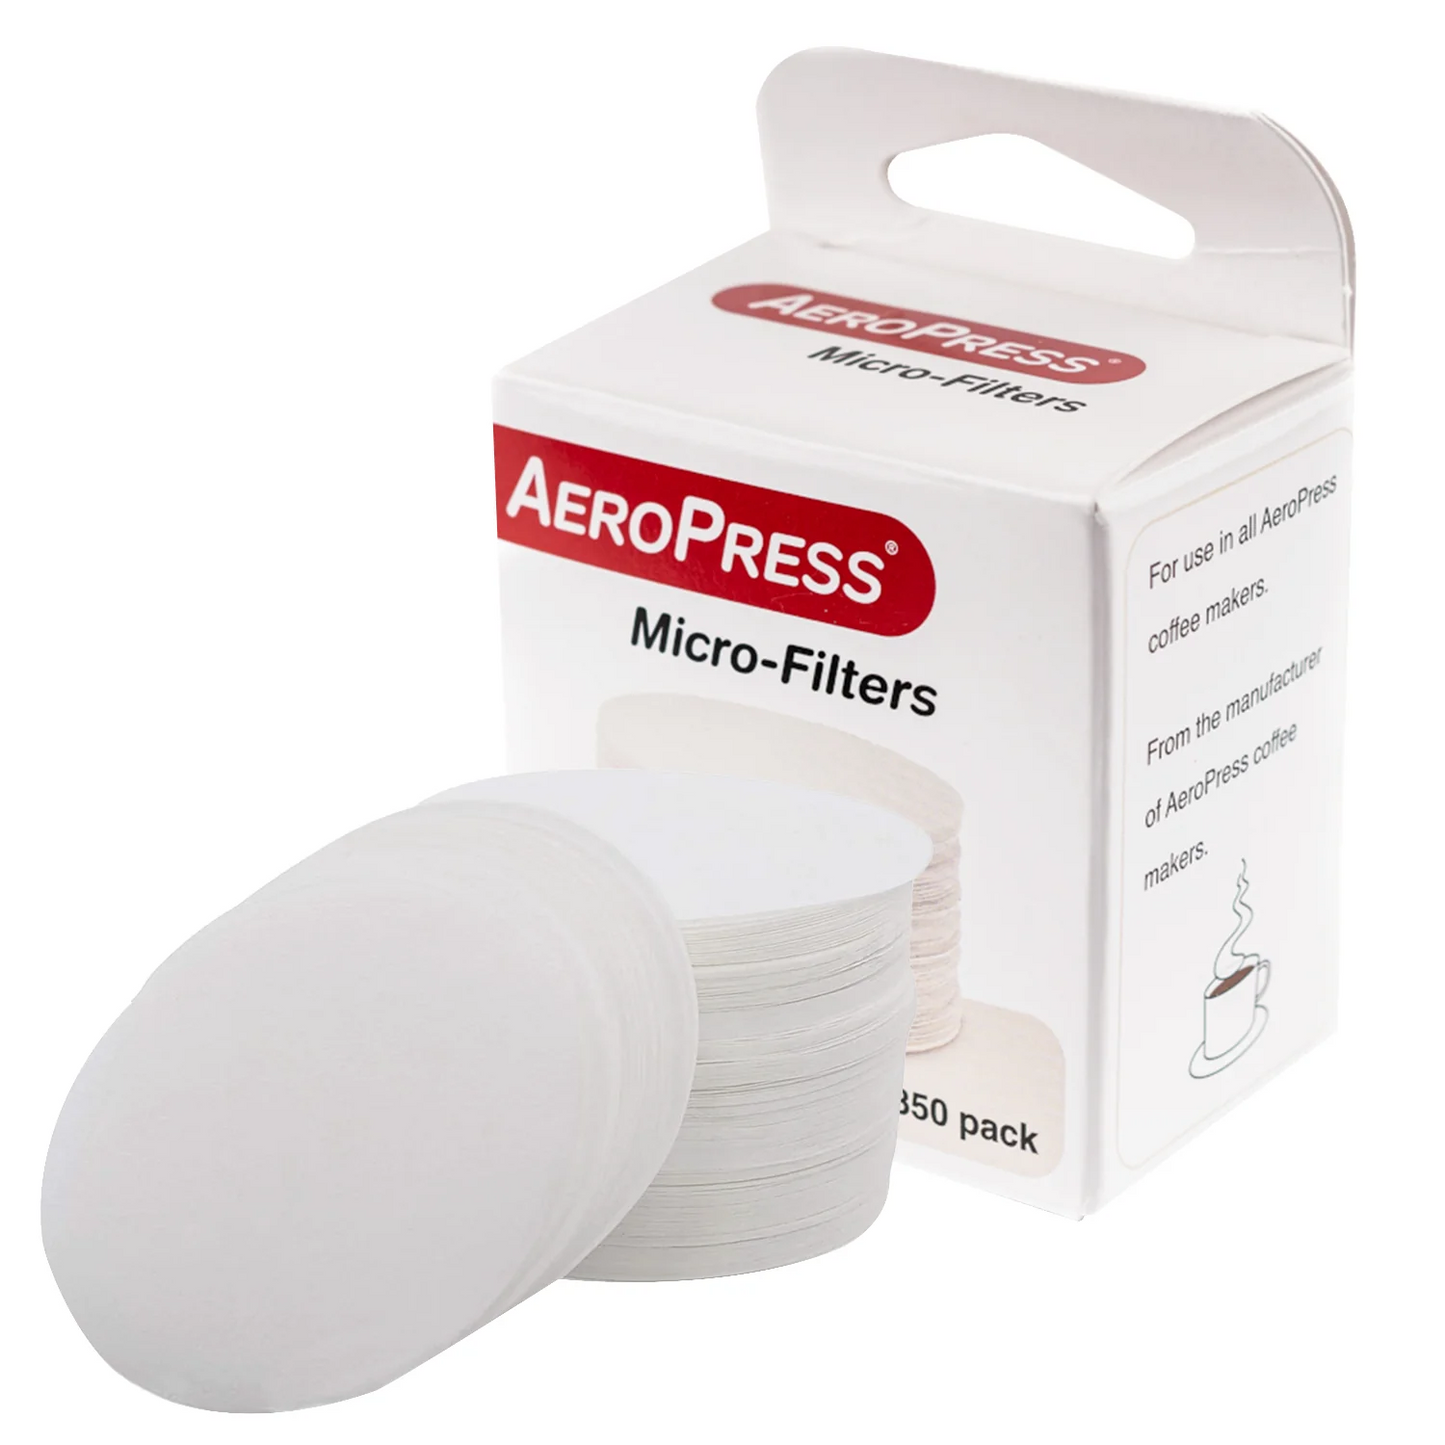 AeroPress Micro-Filters